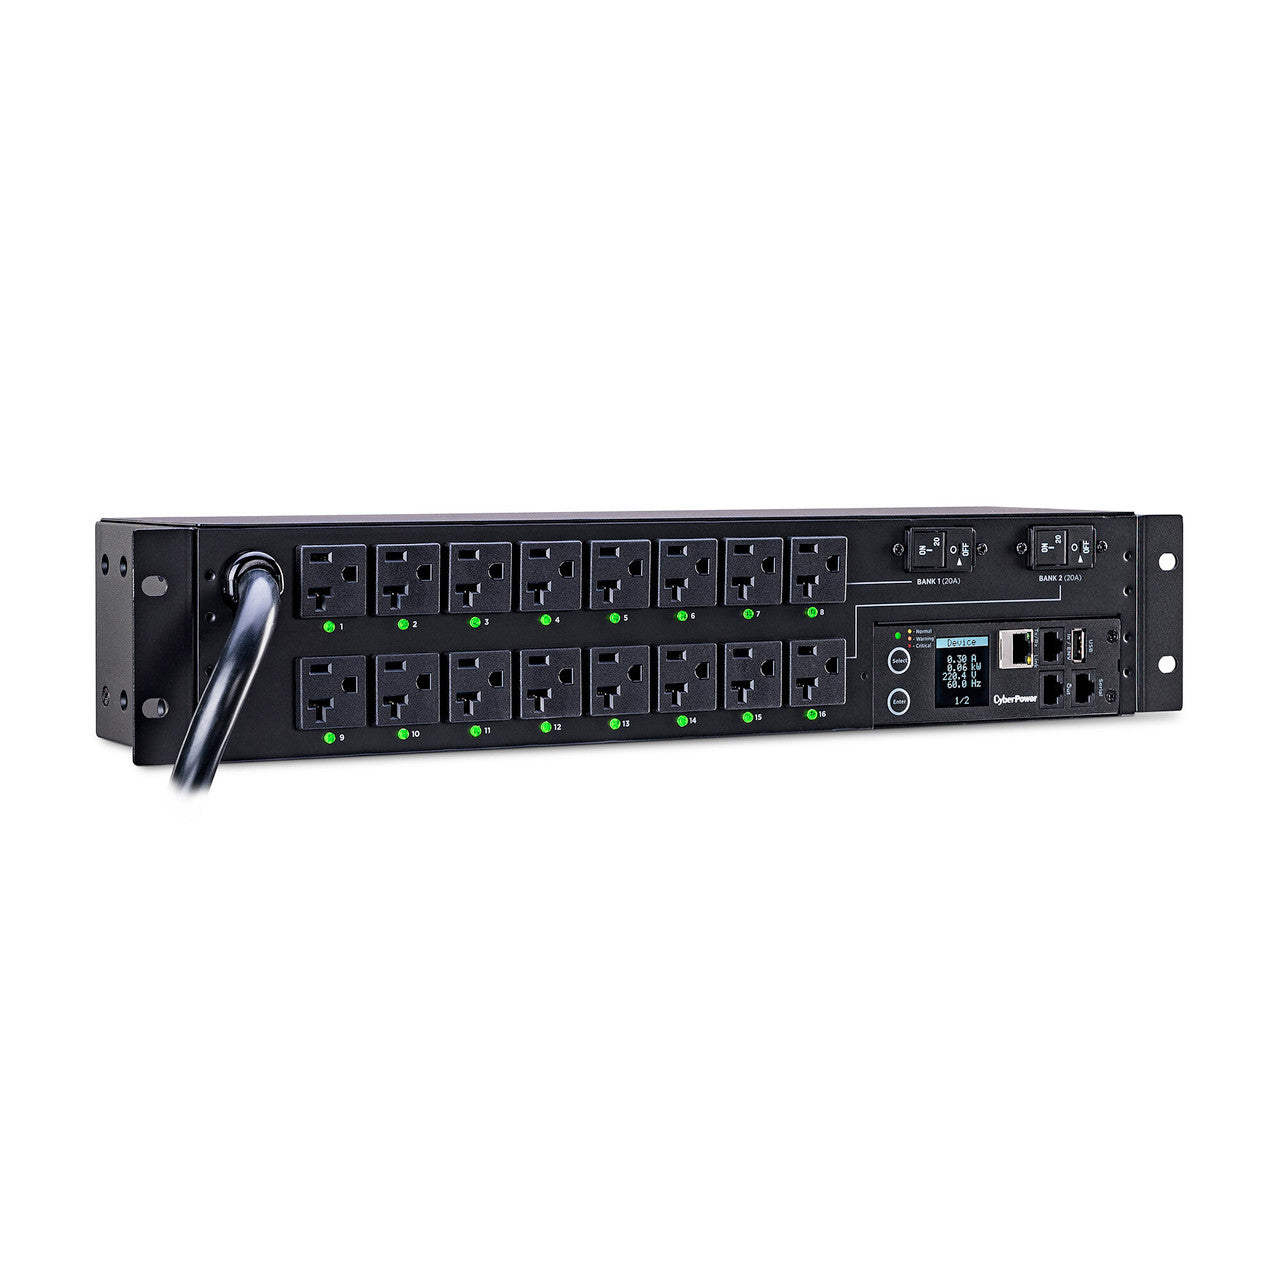 CyberPower PDU41003 Switched PDU 30A 120V NEMA L5-30P input 16 NEMA 5-20R output 12ft cord 1U 3 Year Warranty